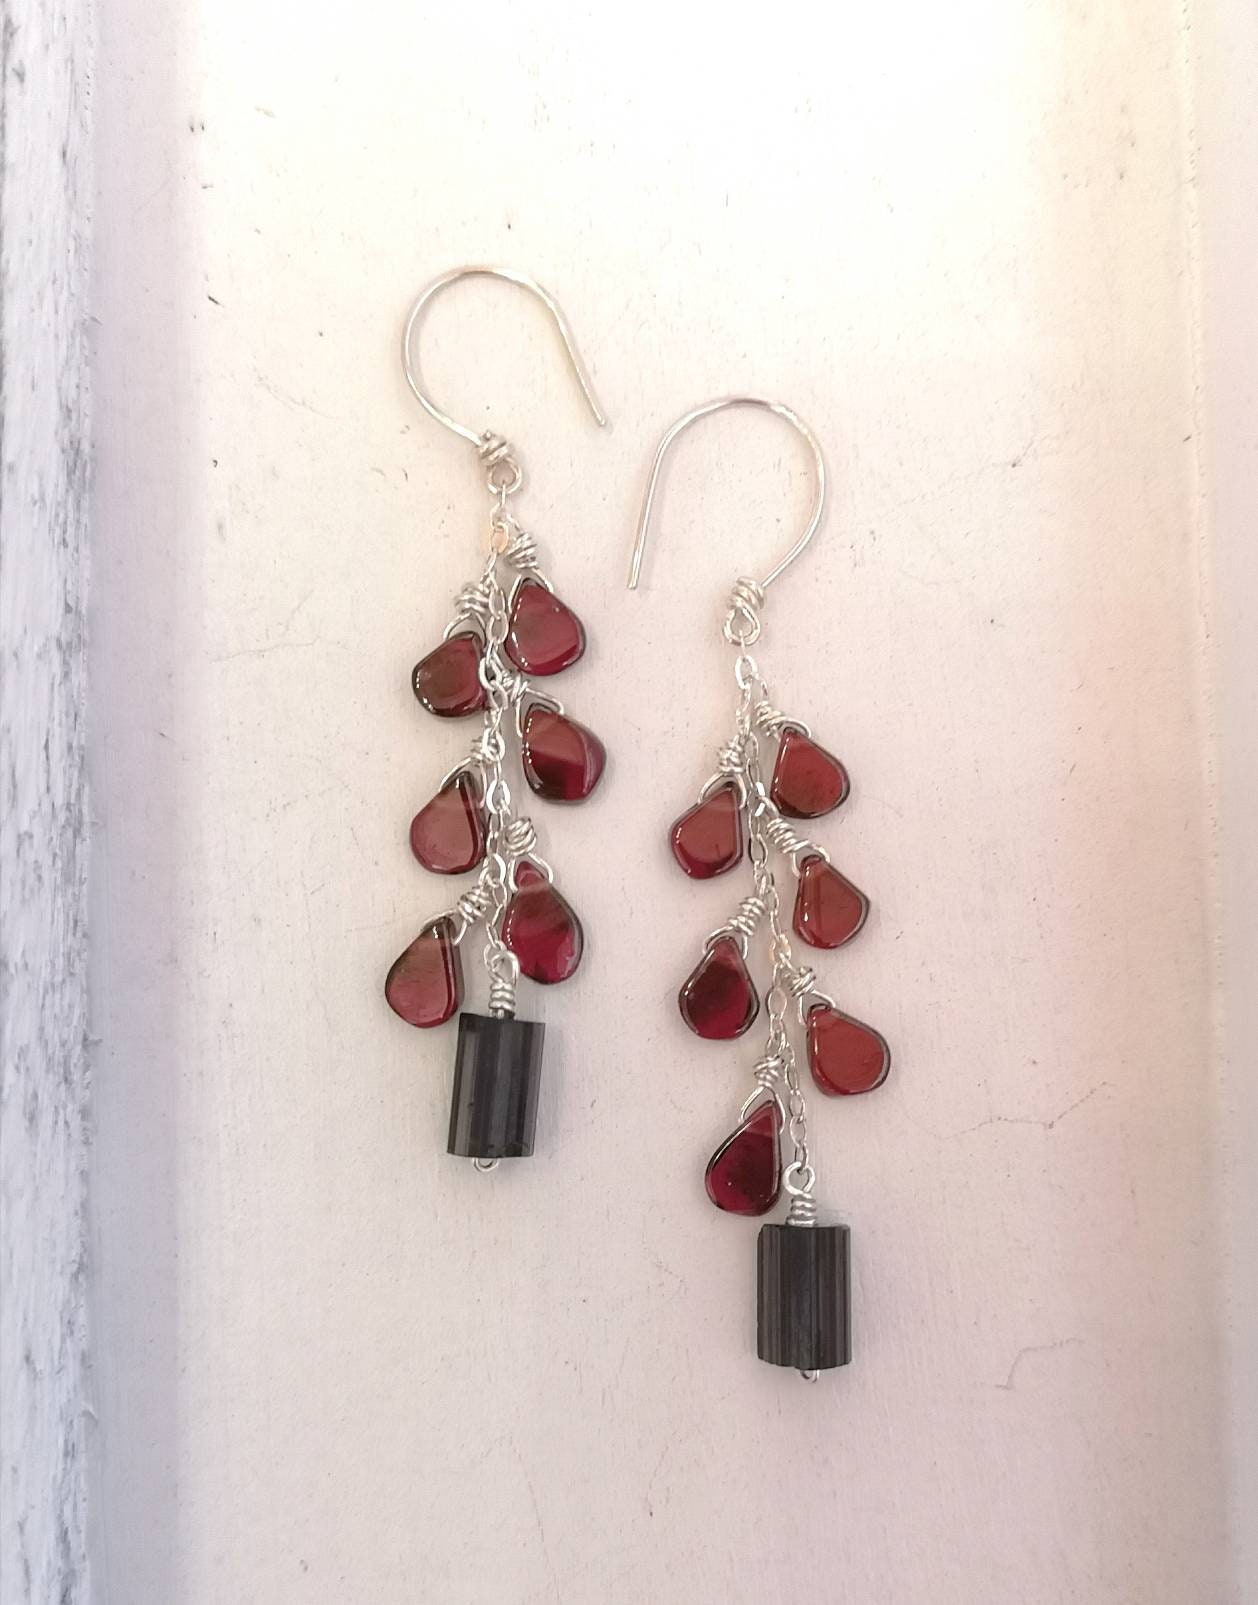 Black Tourmaline and Red Garnet dangle earrings